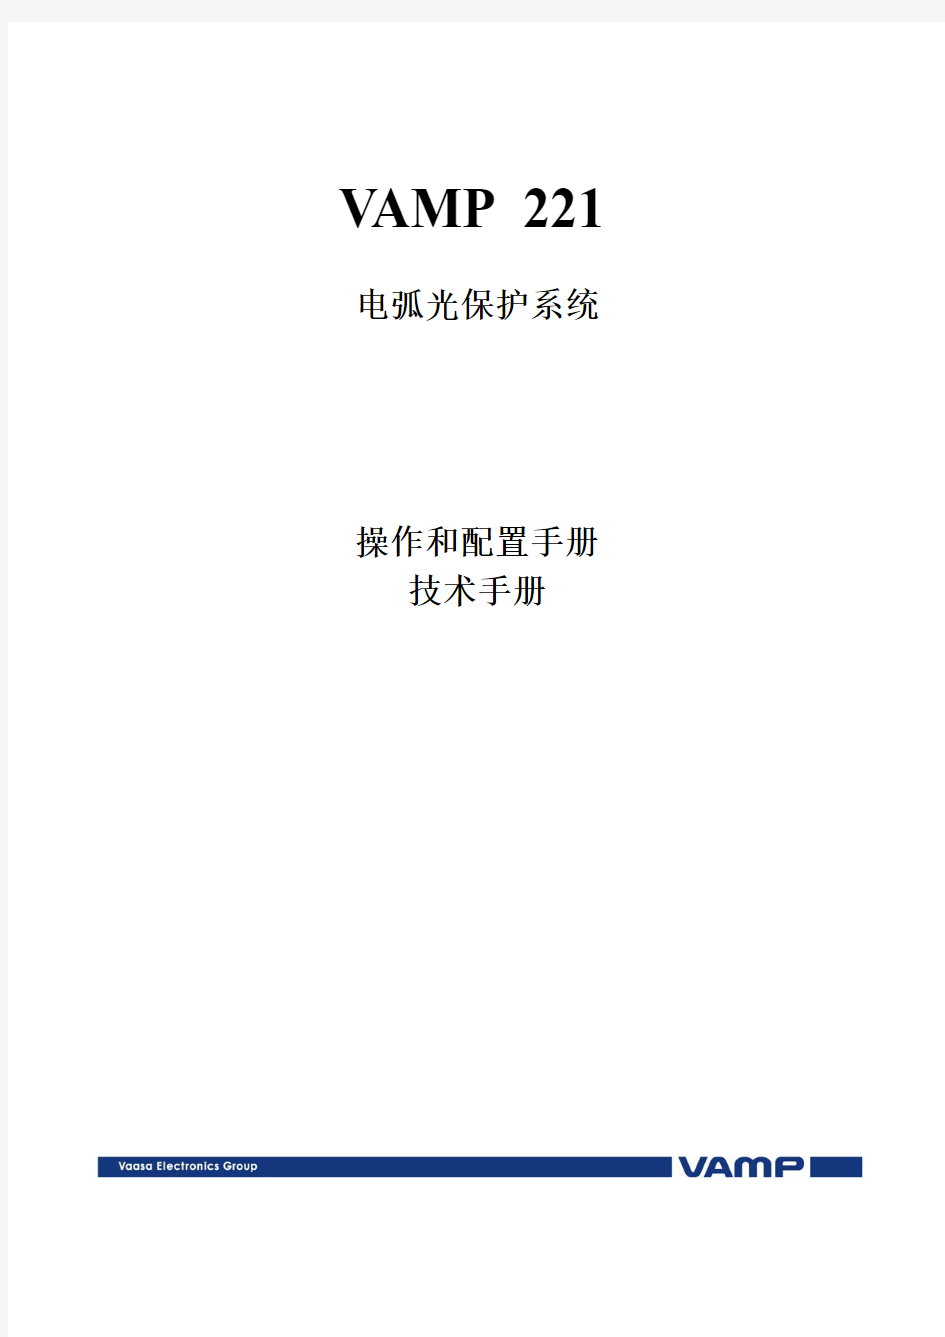 VAMP221电弧光保护操作和技术手册、VAMP321配置参考手册